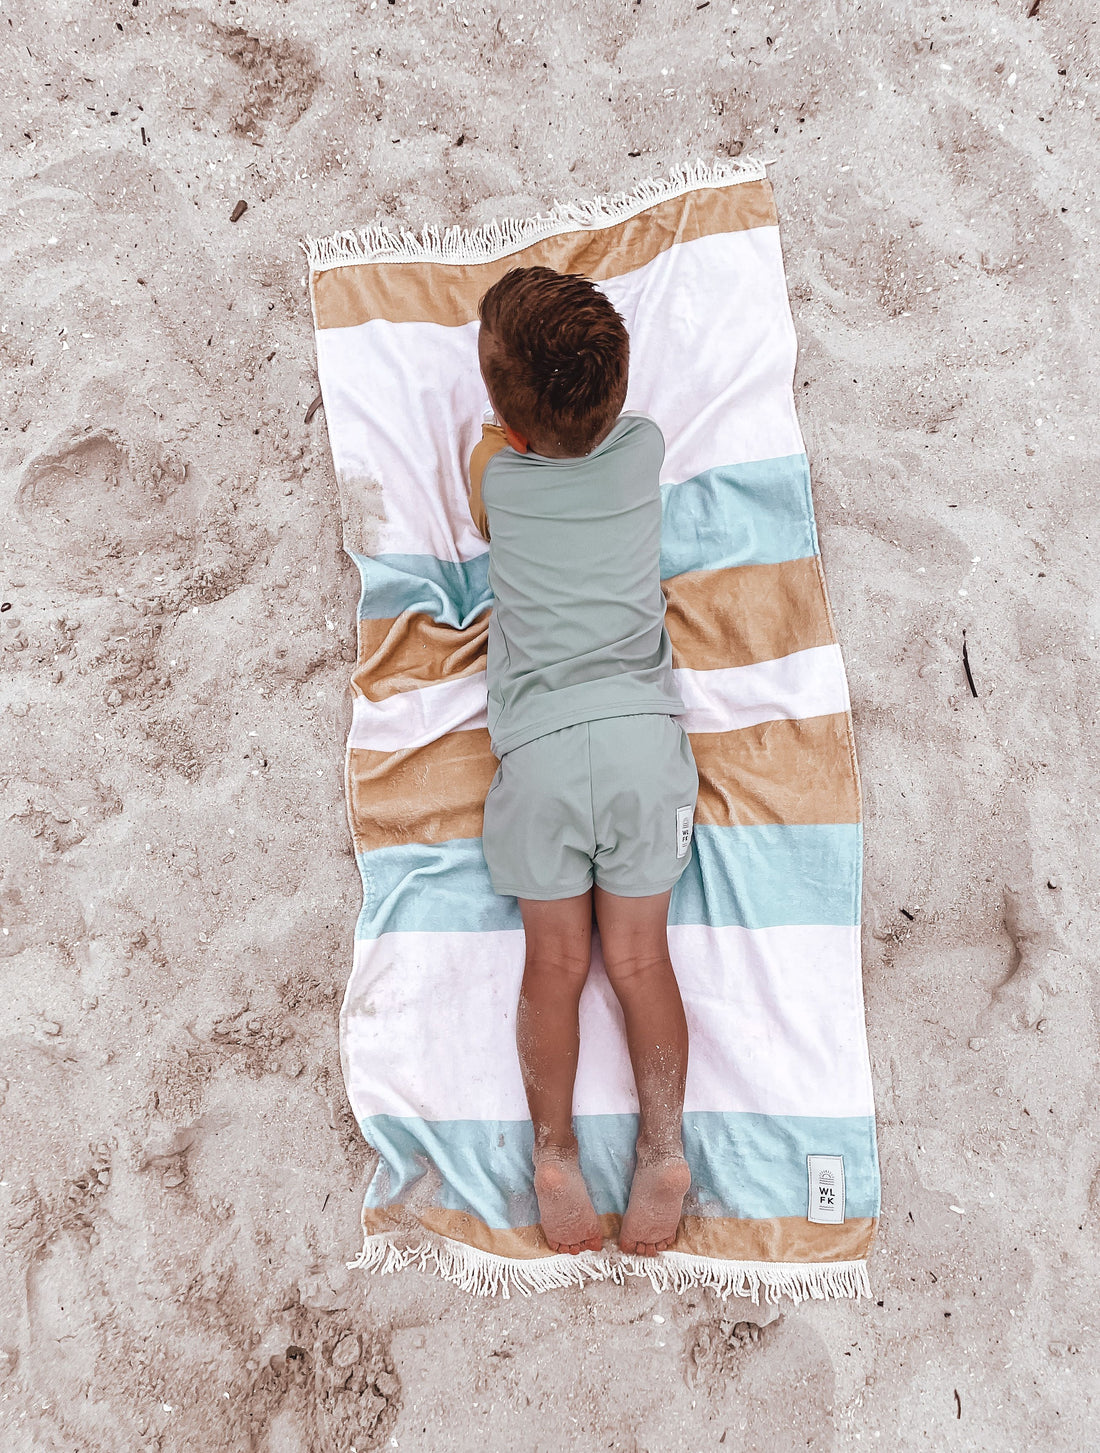 Beach Towel - RYDER